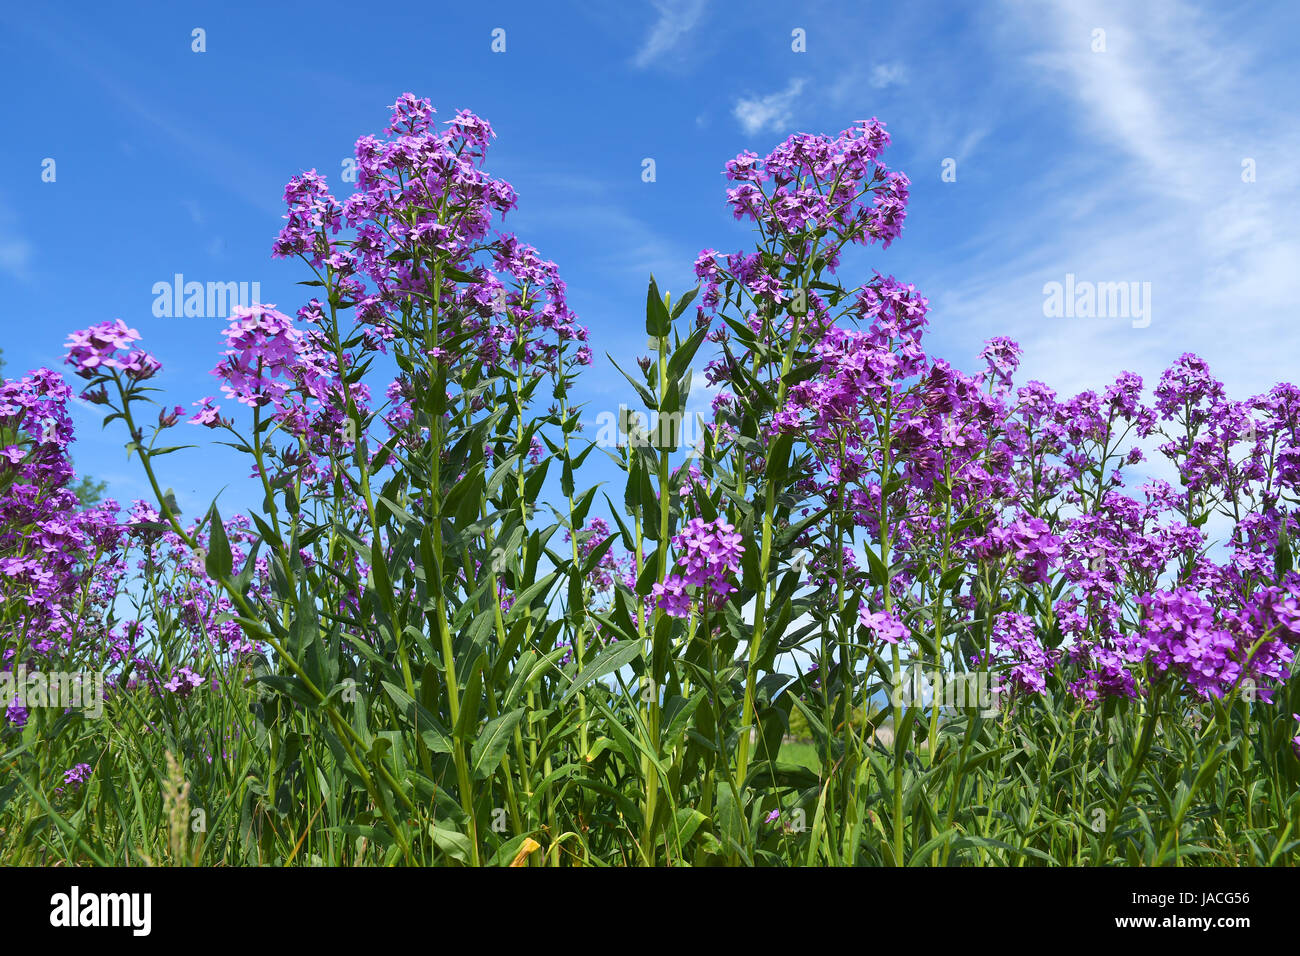 Hesperis matronalis - Sweet rocket - growing against a cloudy blue sky Stock Photo